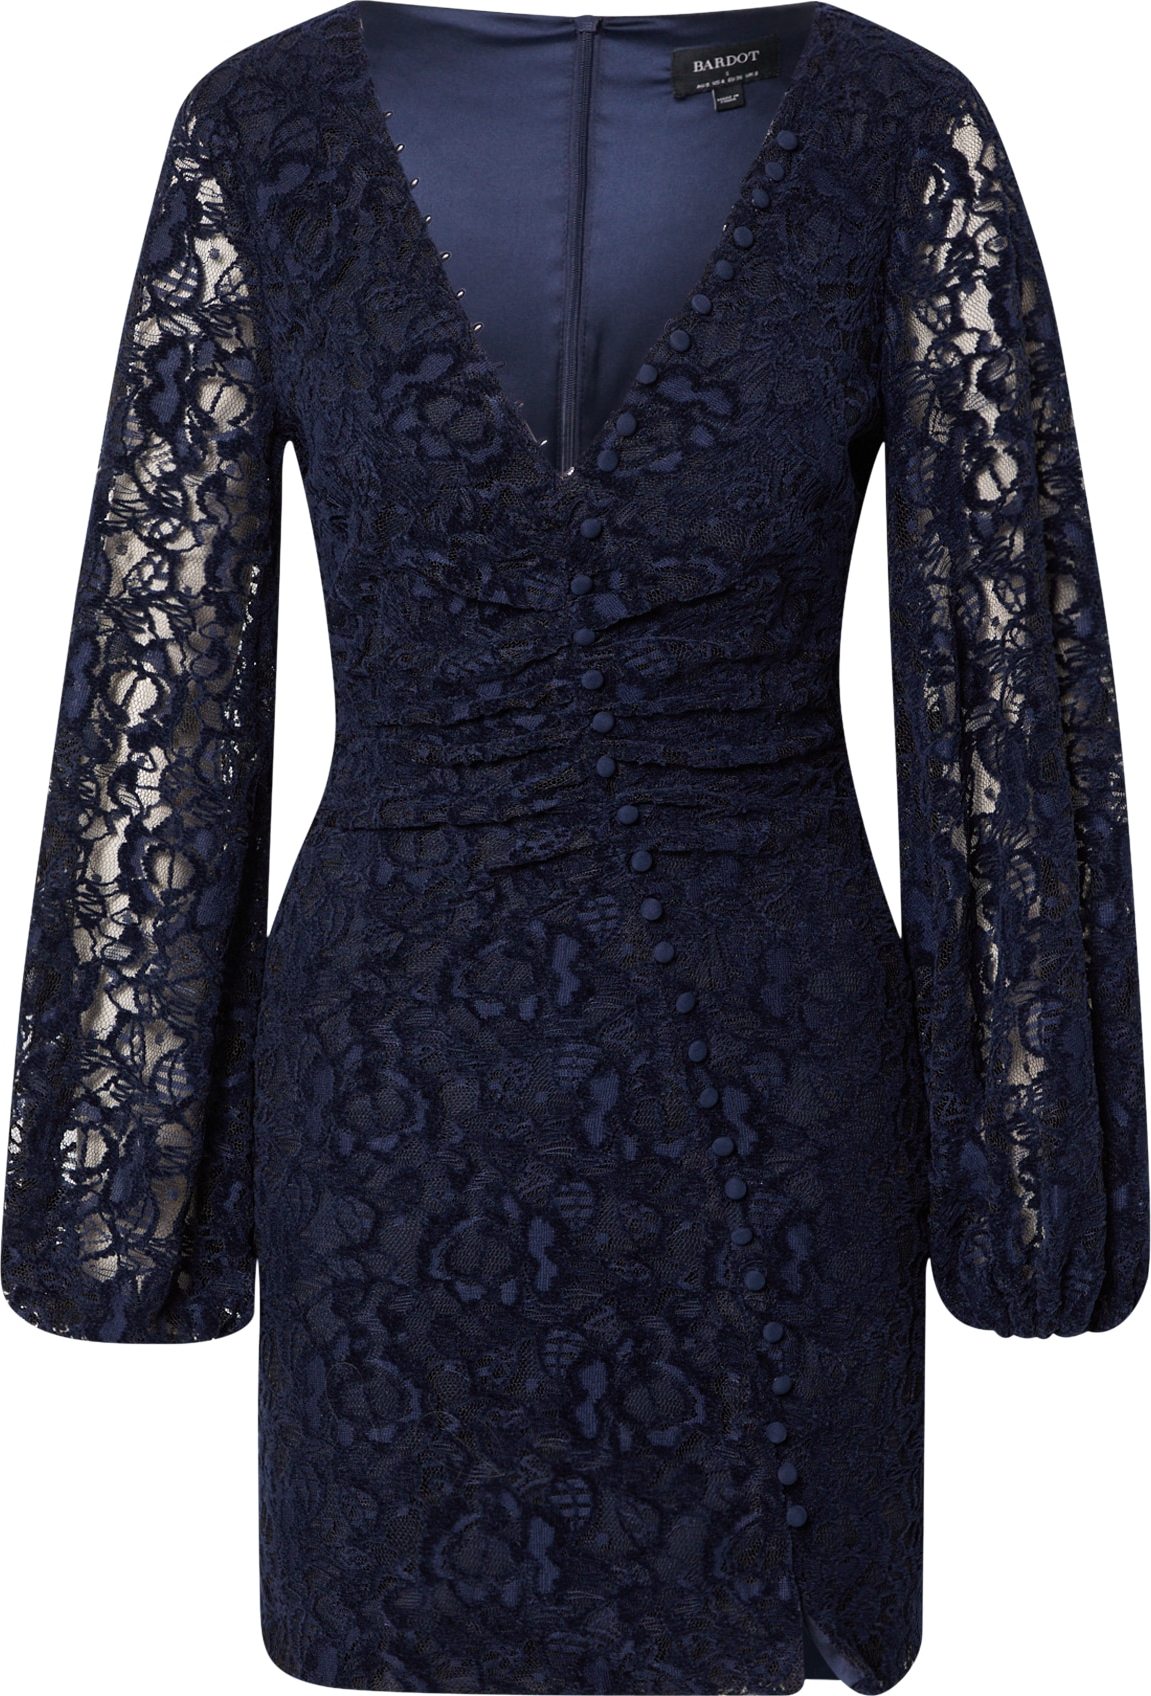 Bardot Koktejlové šaty 'REID' tmavě modrá